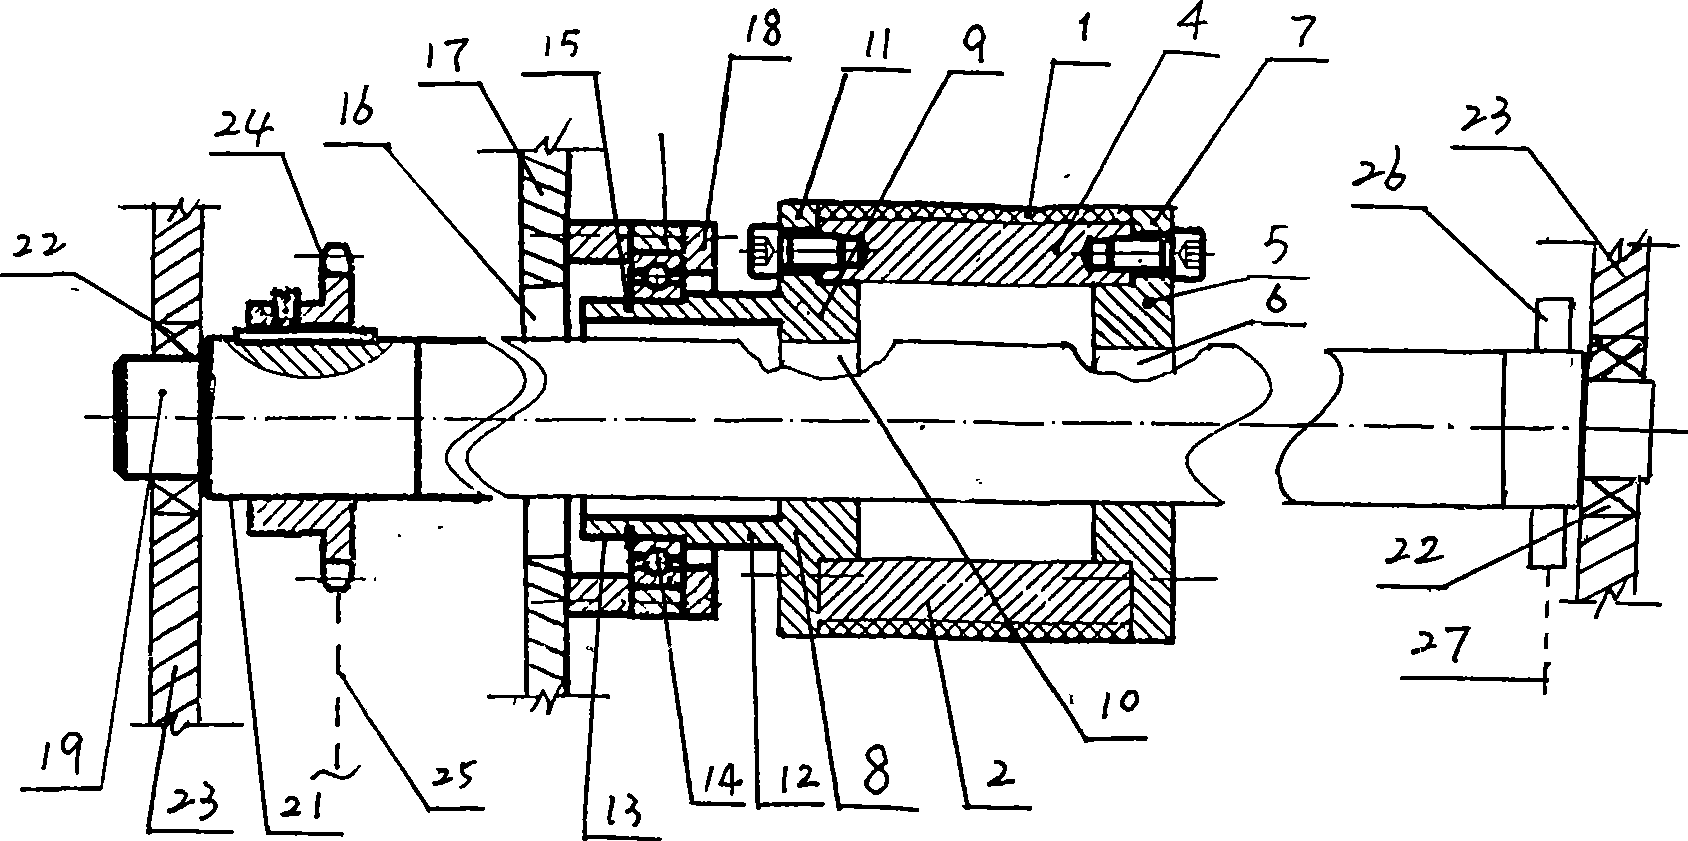 Secondary impression device of corrugated case